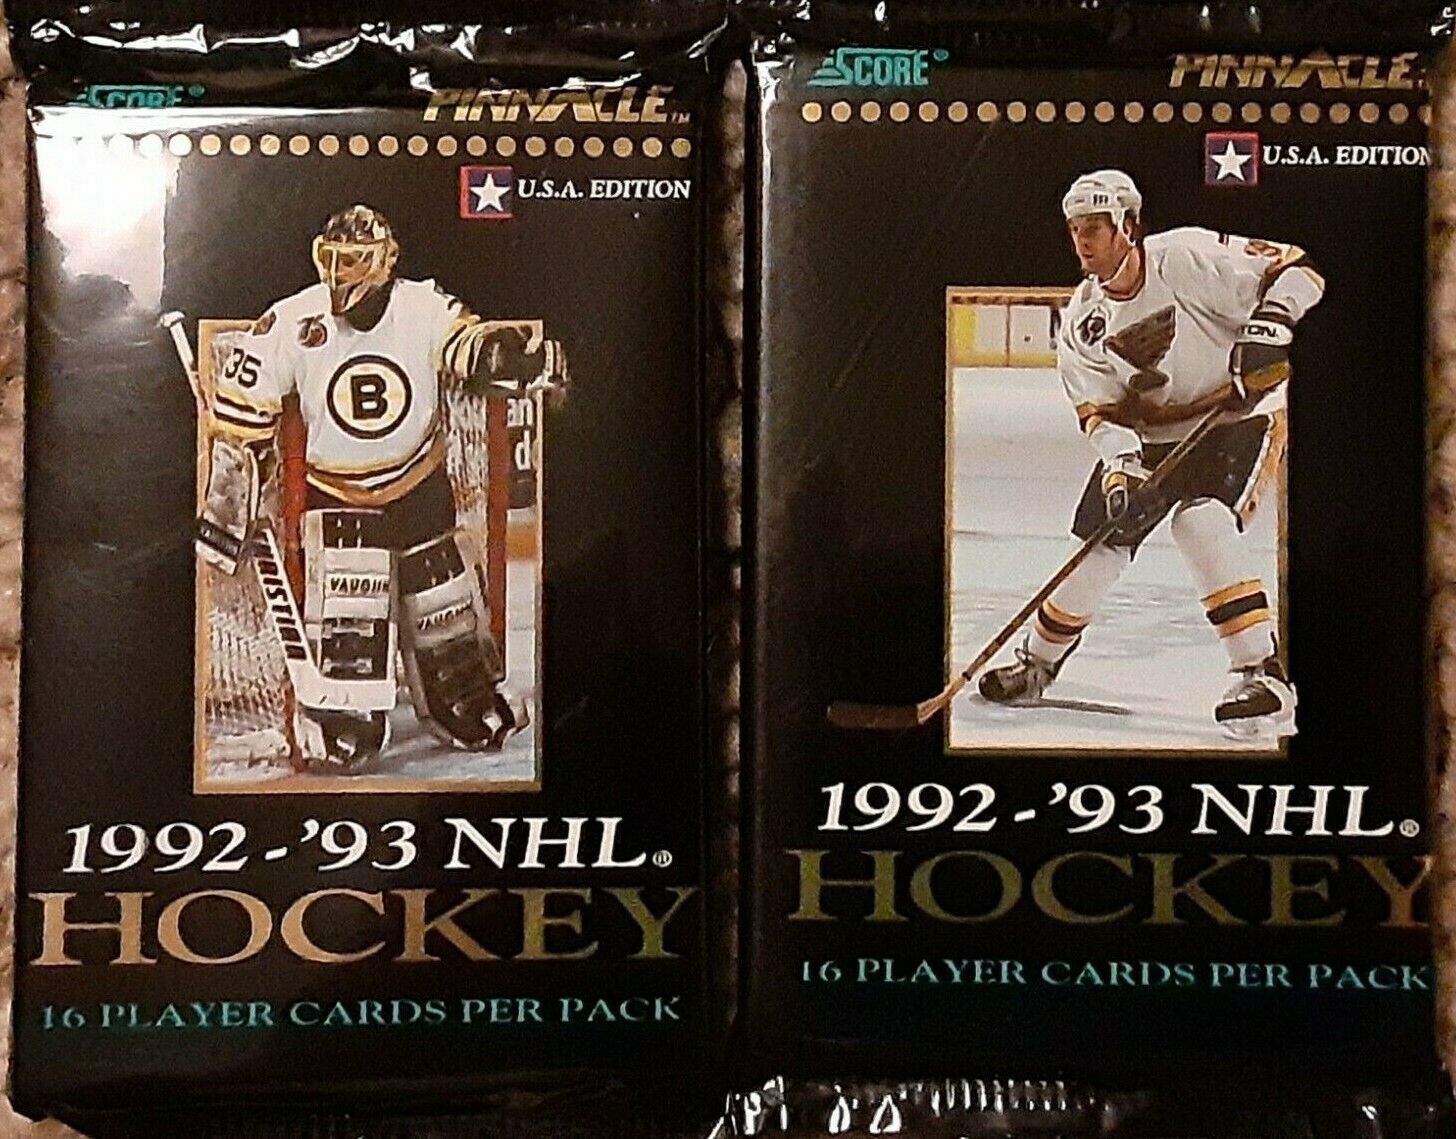 1992-93 Score Pinnacle Hockey cards lot of 2 unopened packs 16 cards per pack